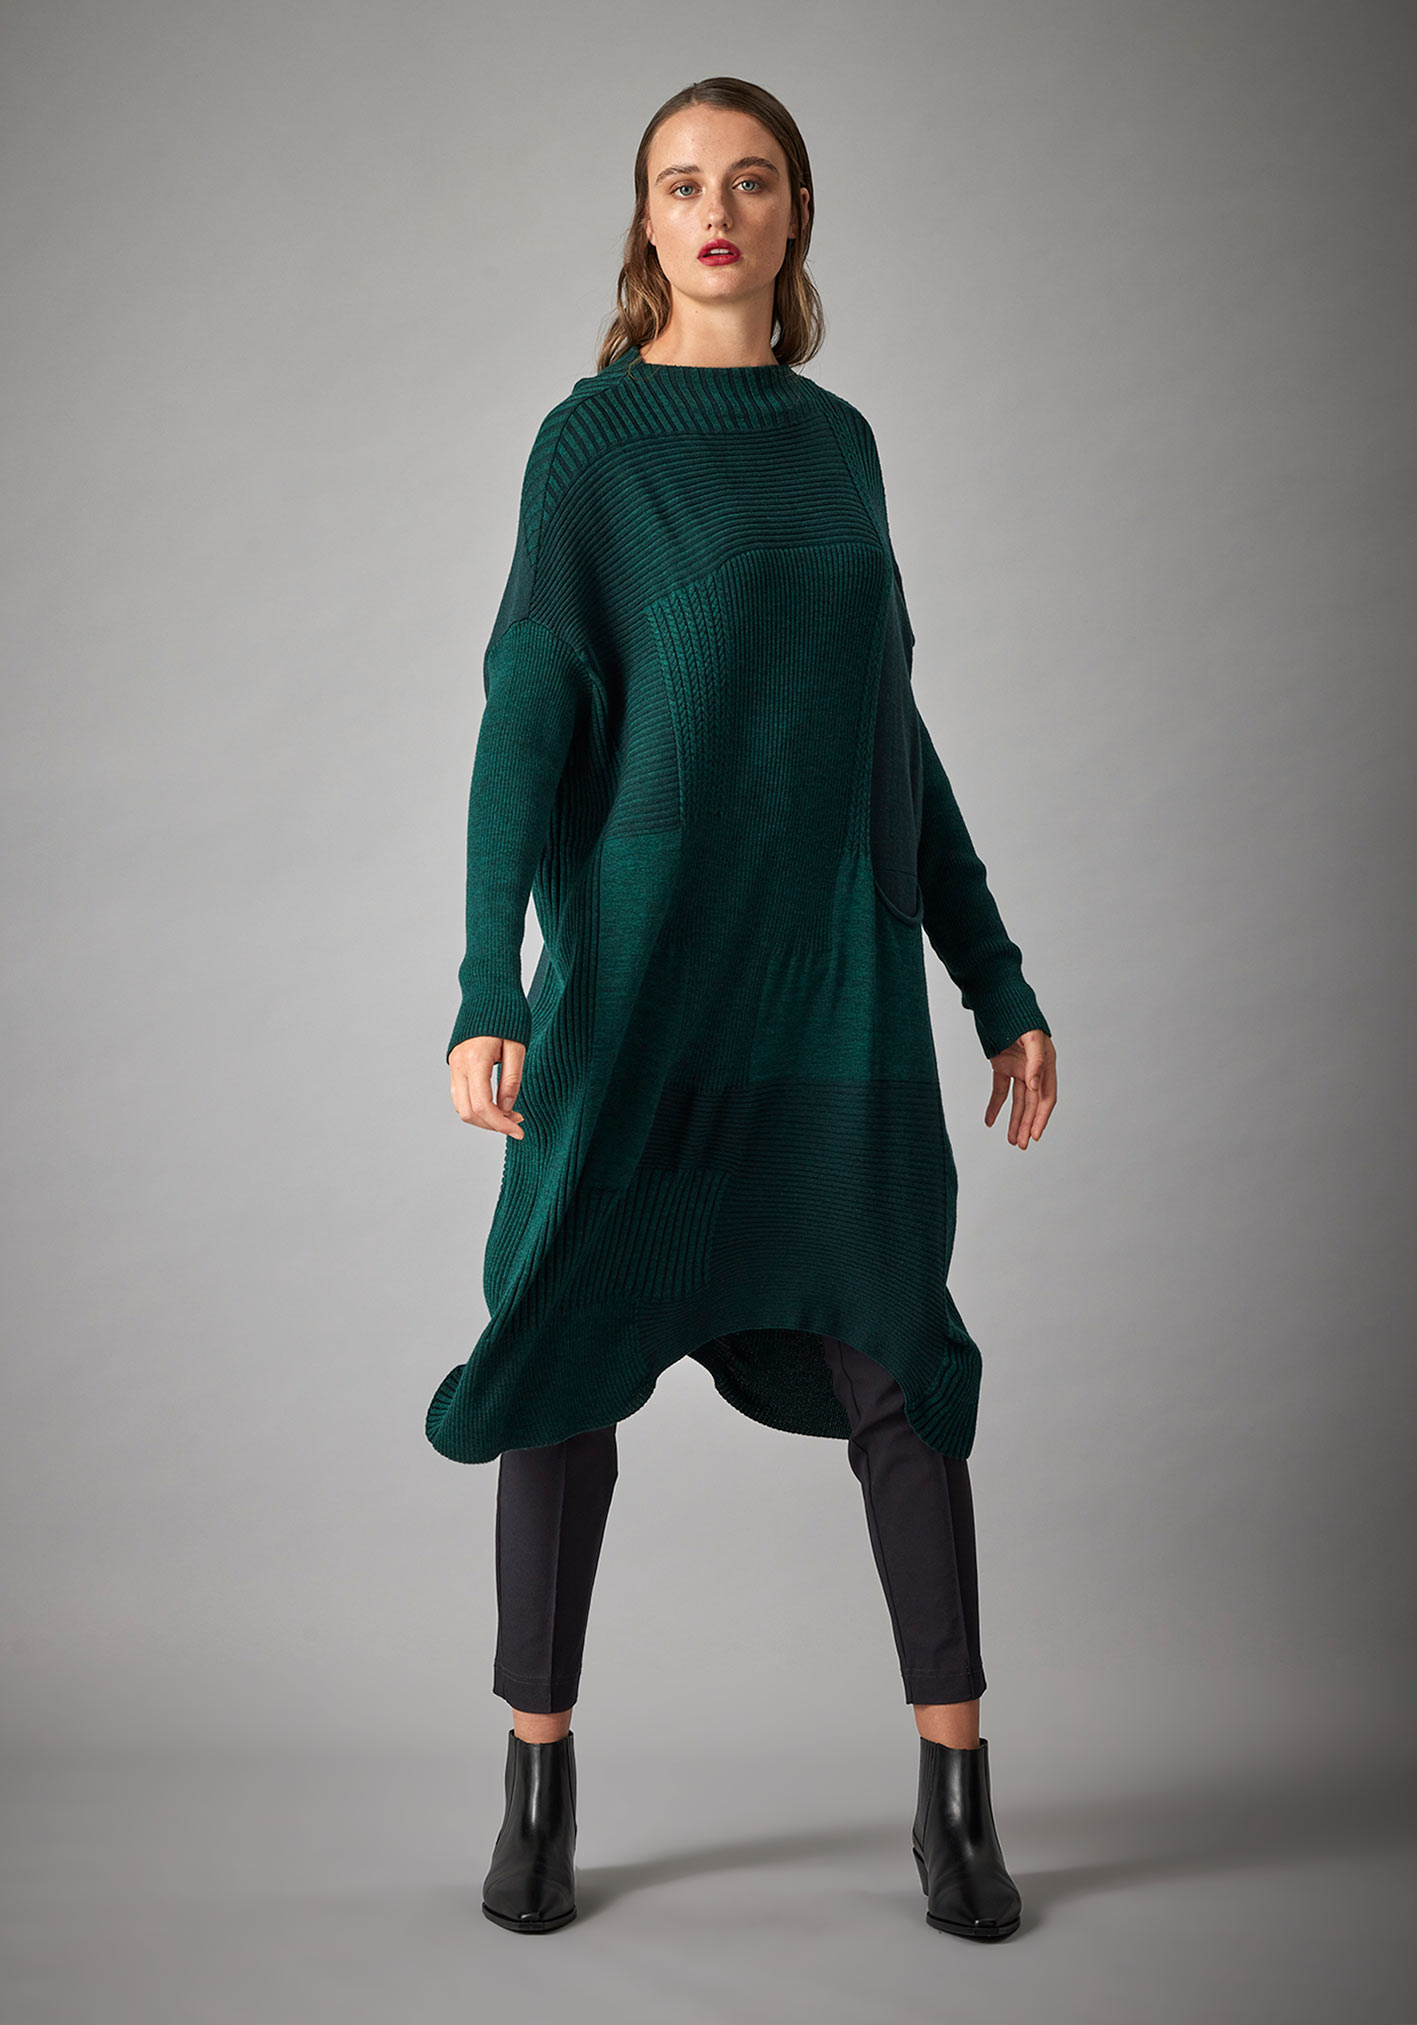 buy the latest Fretwork Tunic Dress online